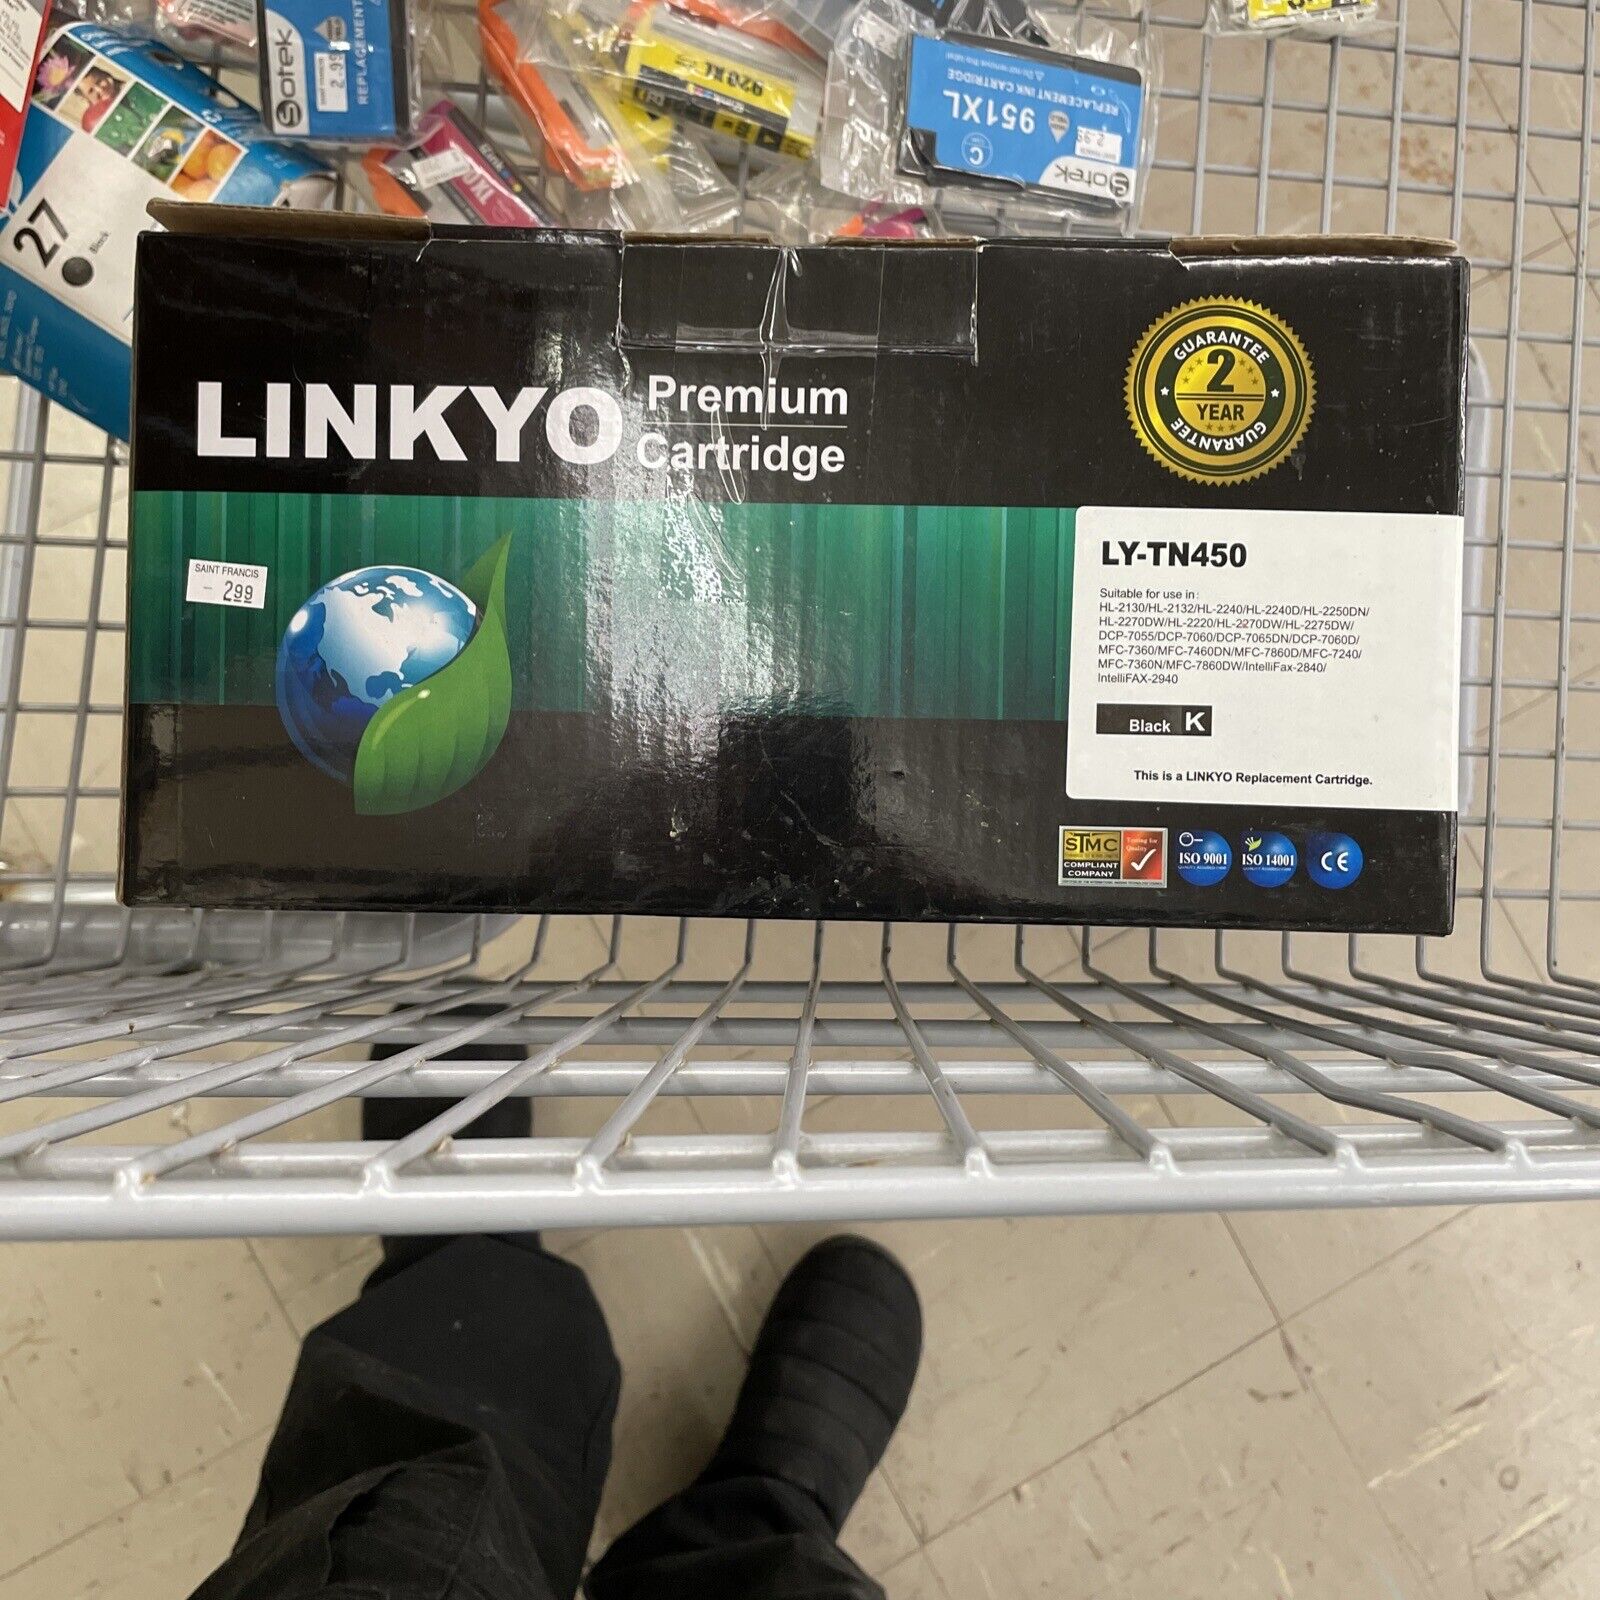 Linkyo premium cartridge LY-TN 450 Black